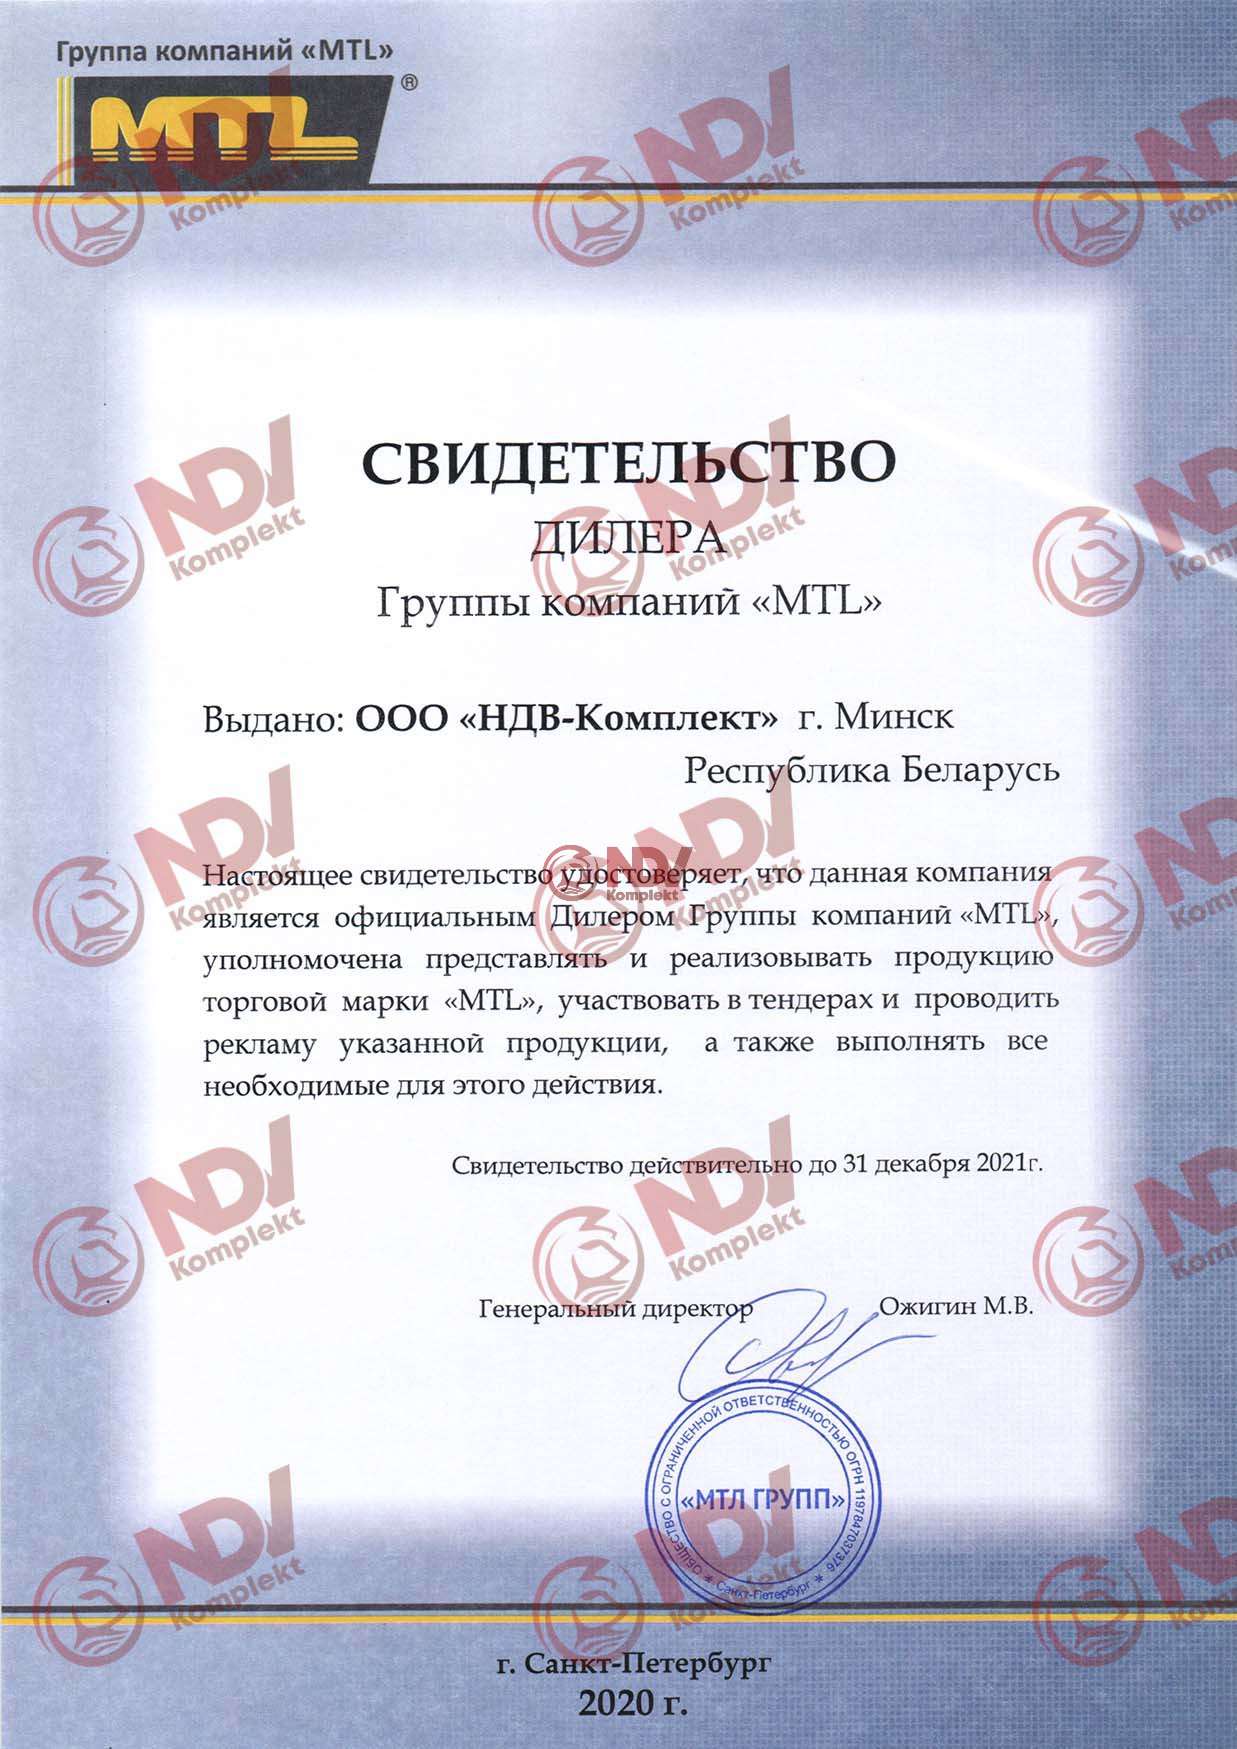 Сертификат8